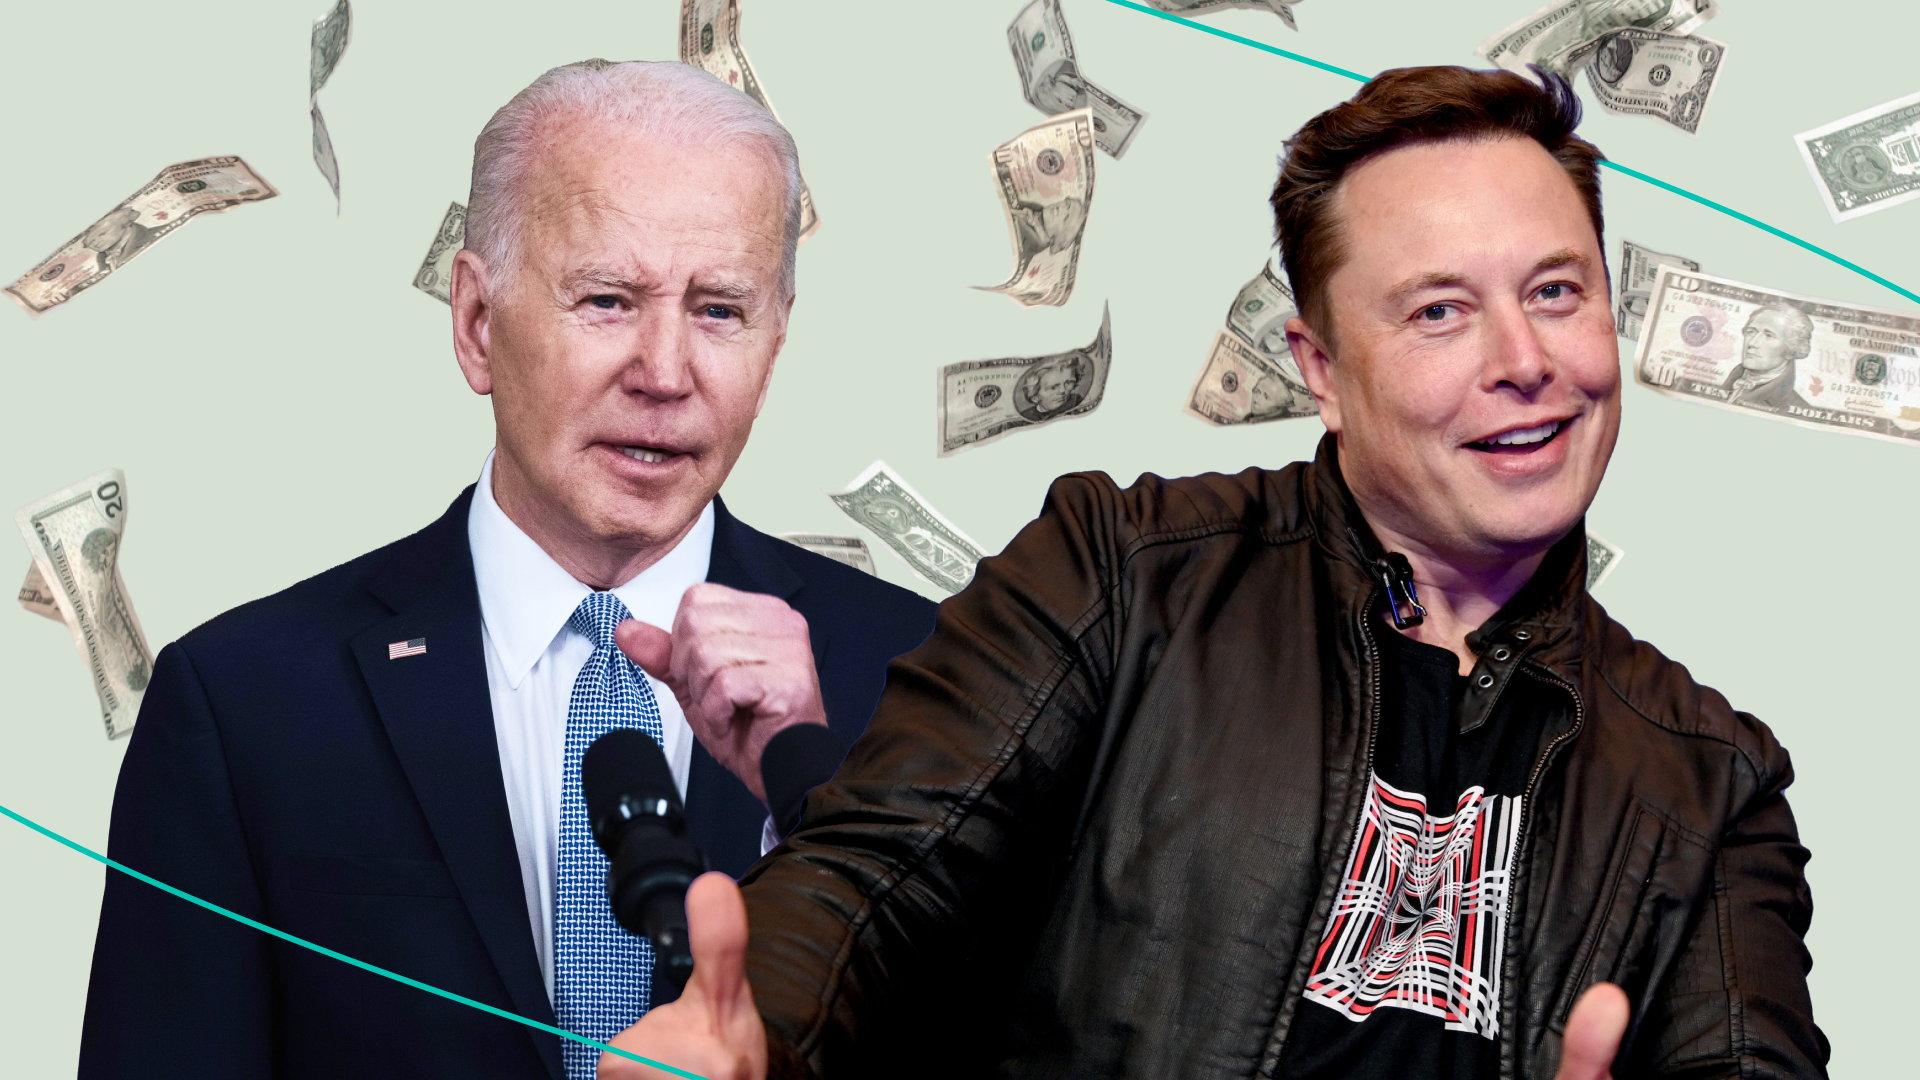 Joe Biden and Elon Musk with dollar bills in background